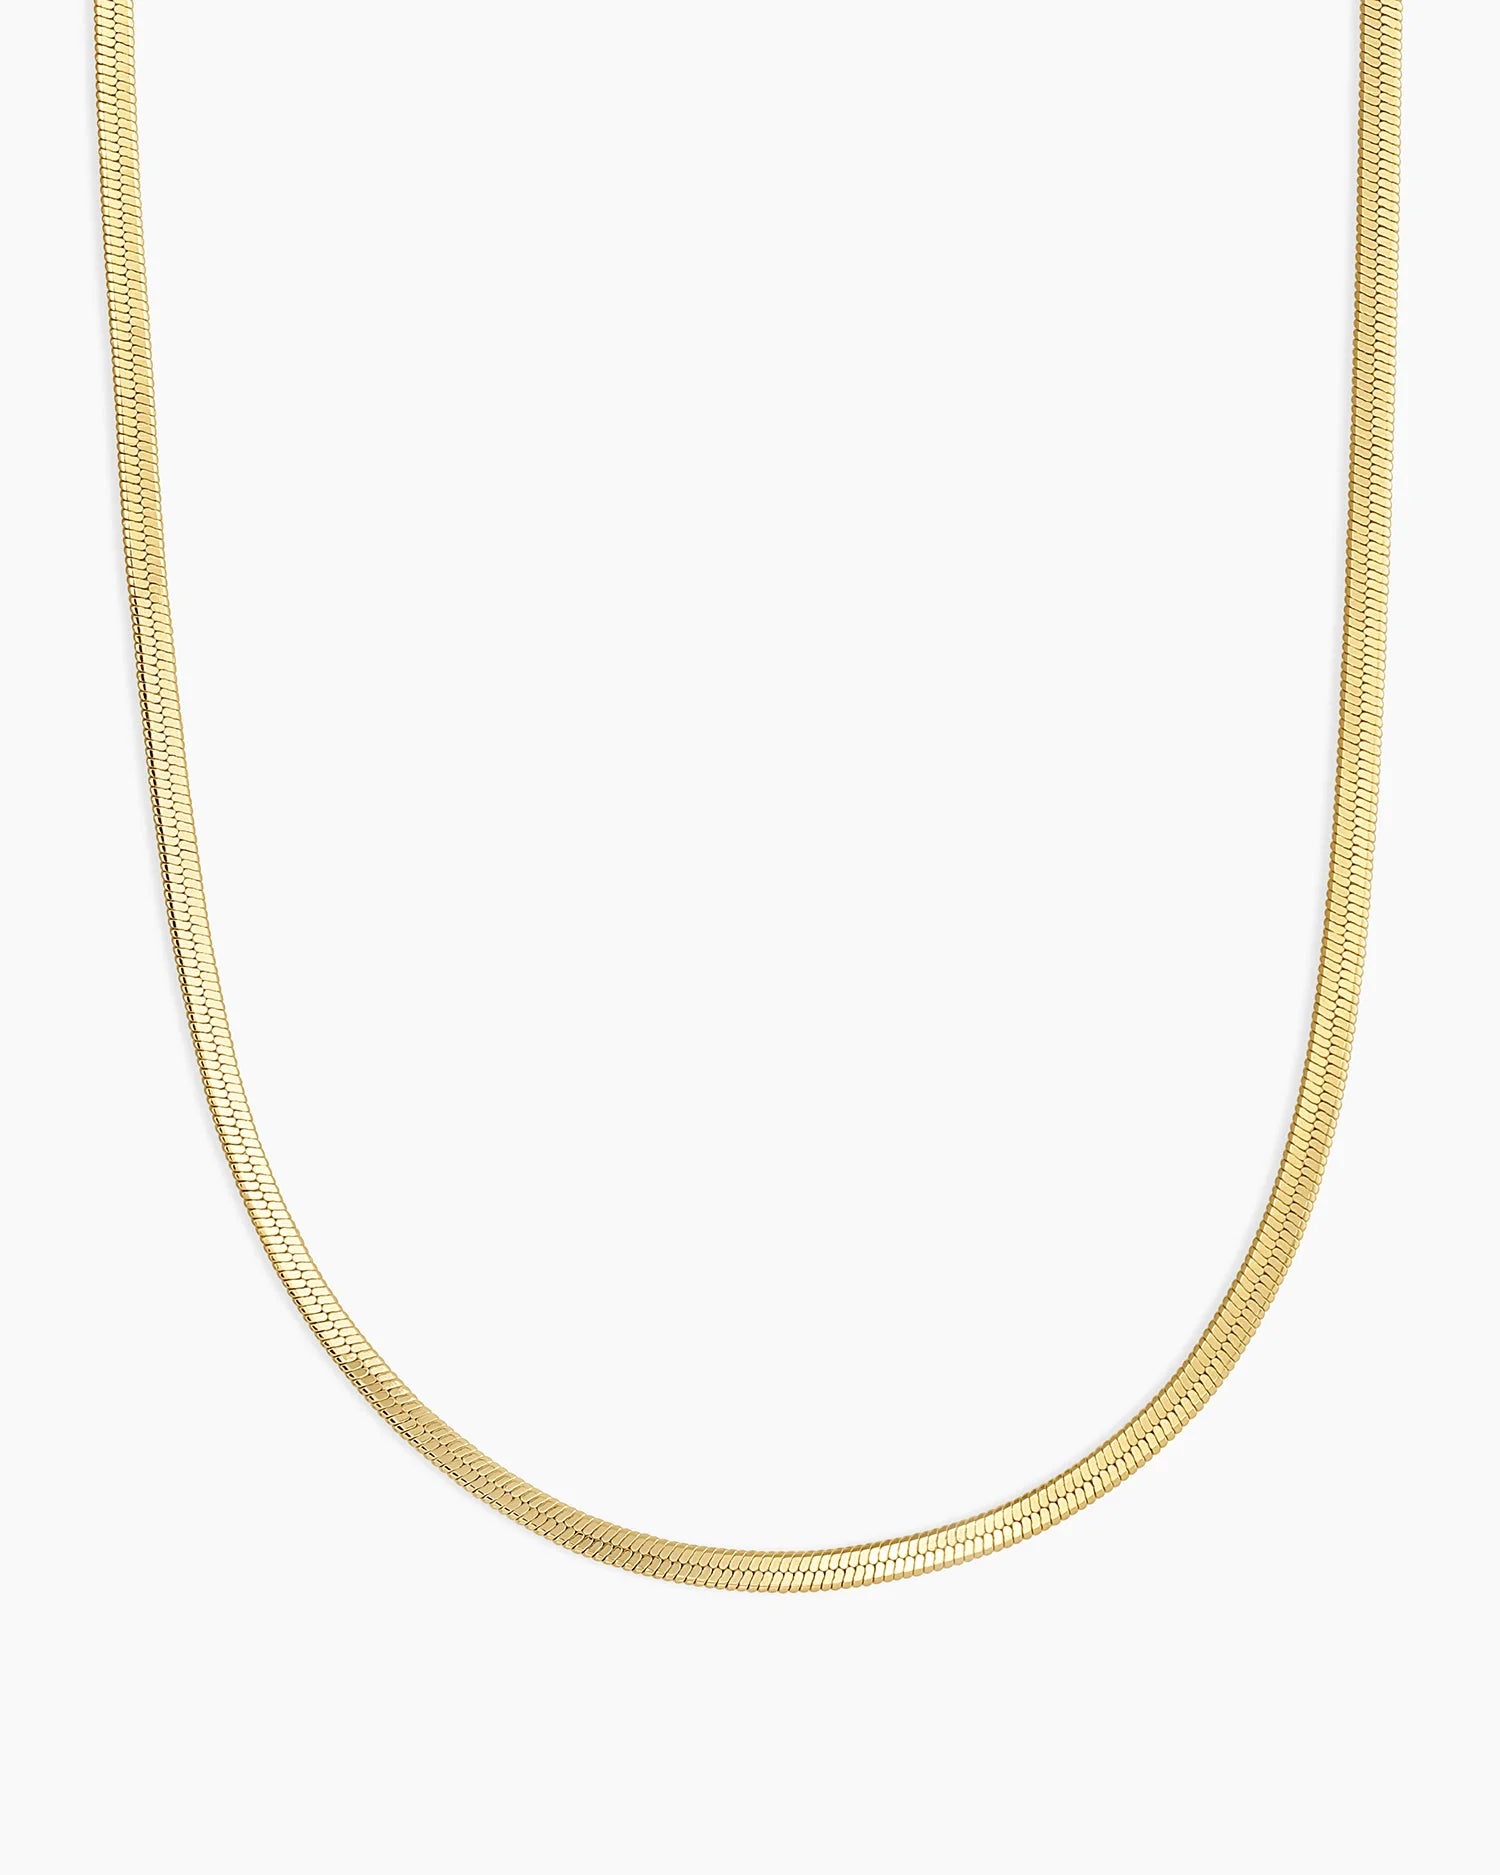 Venice mini necklace - gold